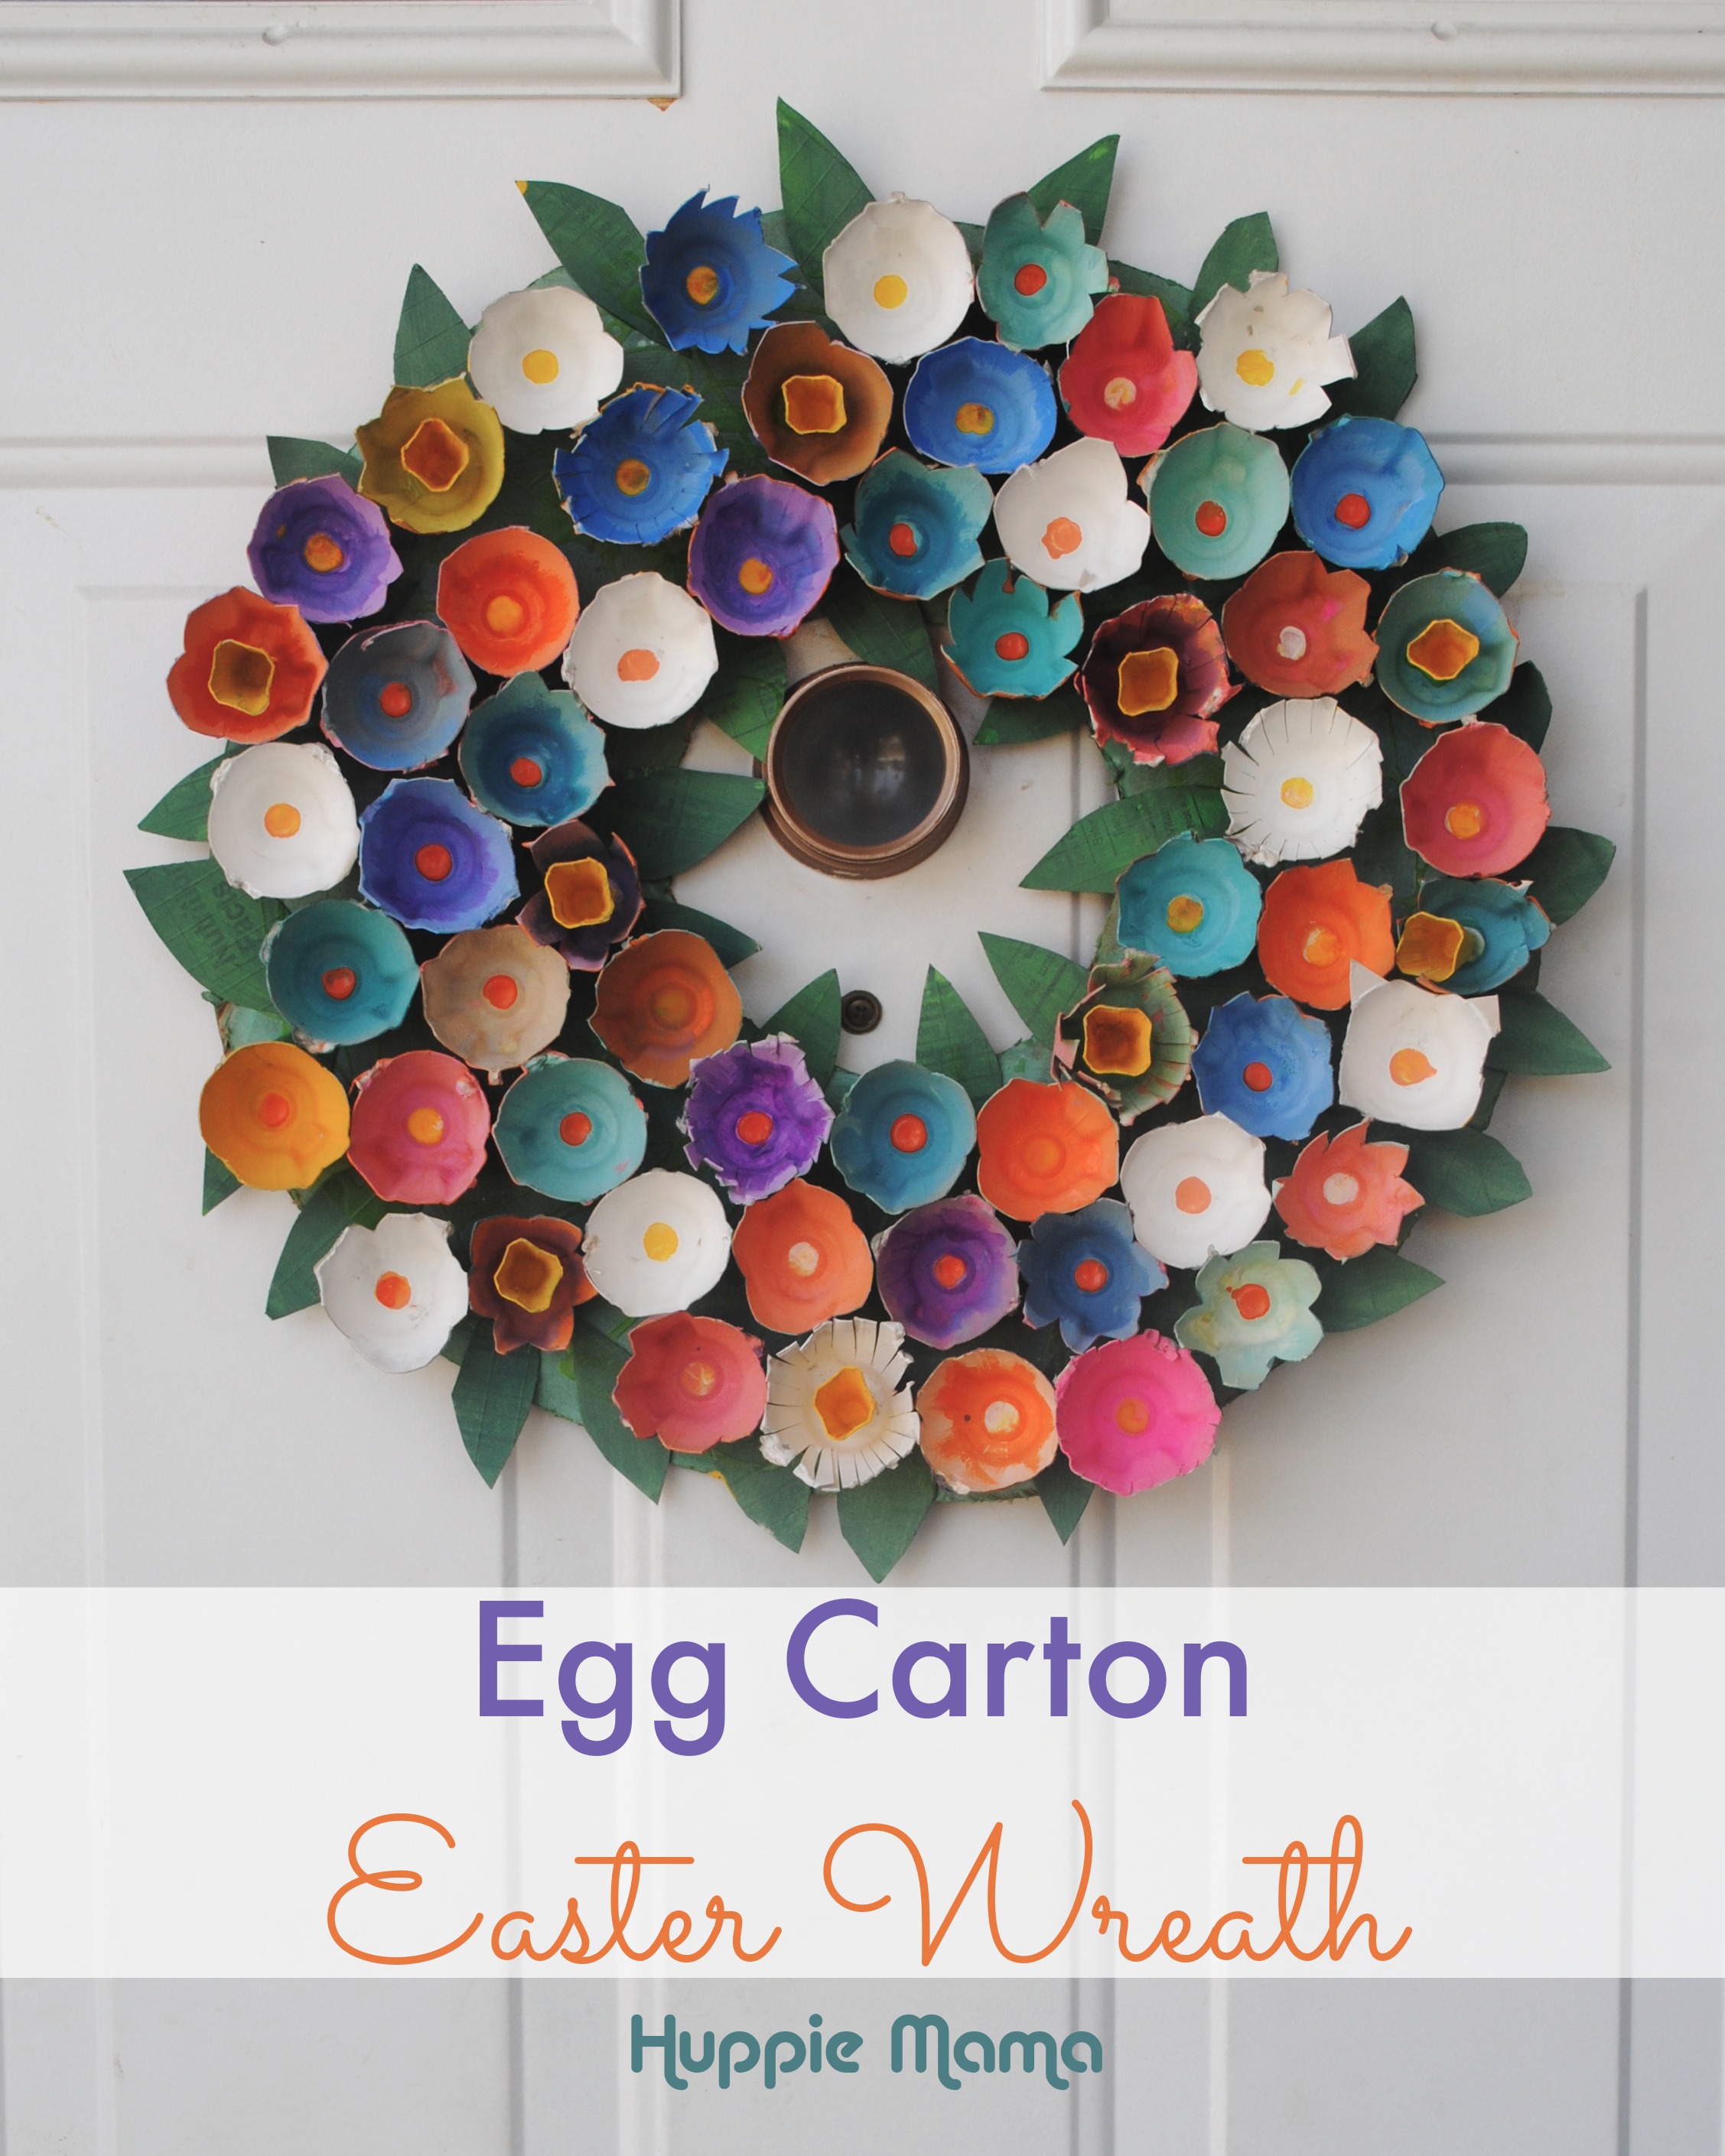 http://huppiemama.com/wp-content/uploads/2014/04/Egg-Carton-Easter-Wreath.jpg